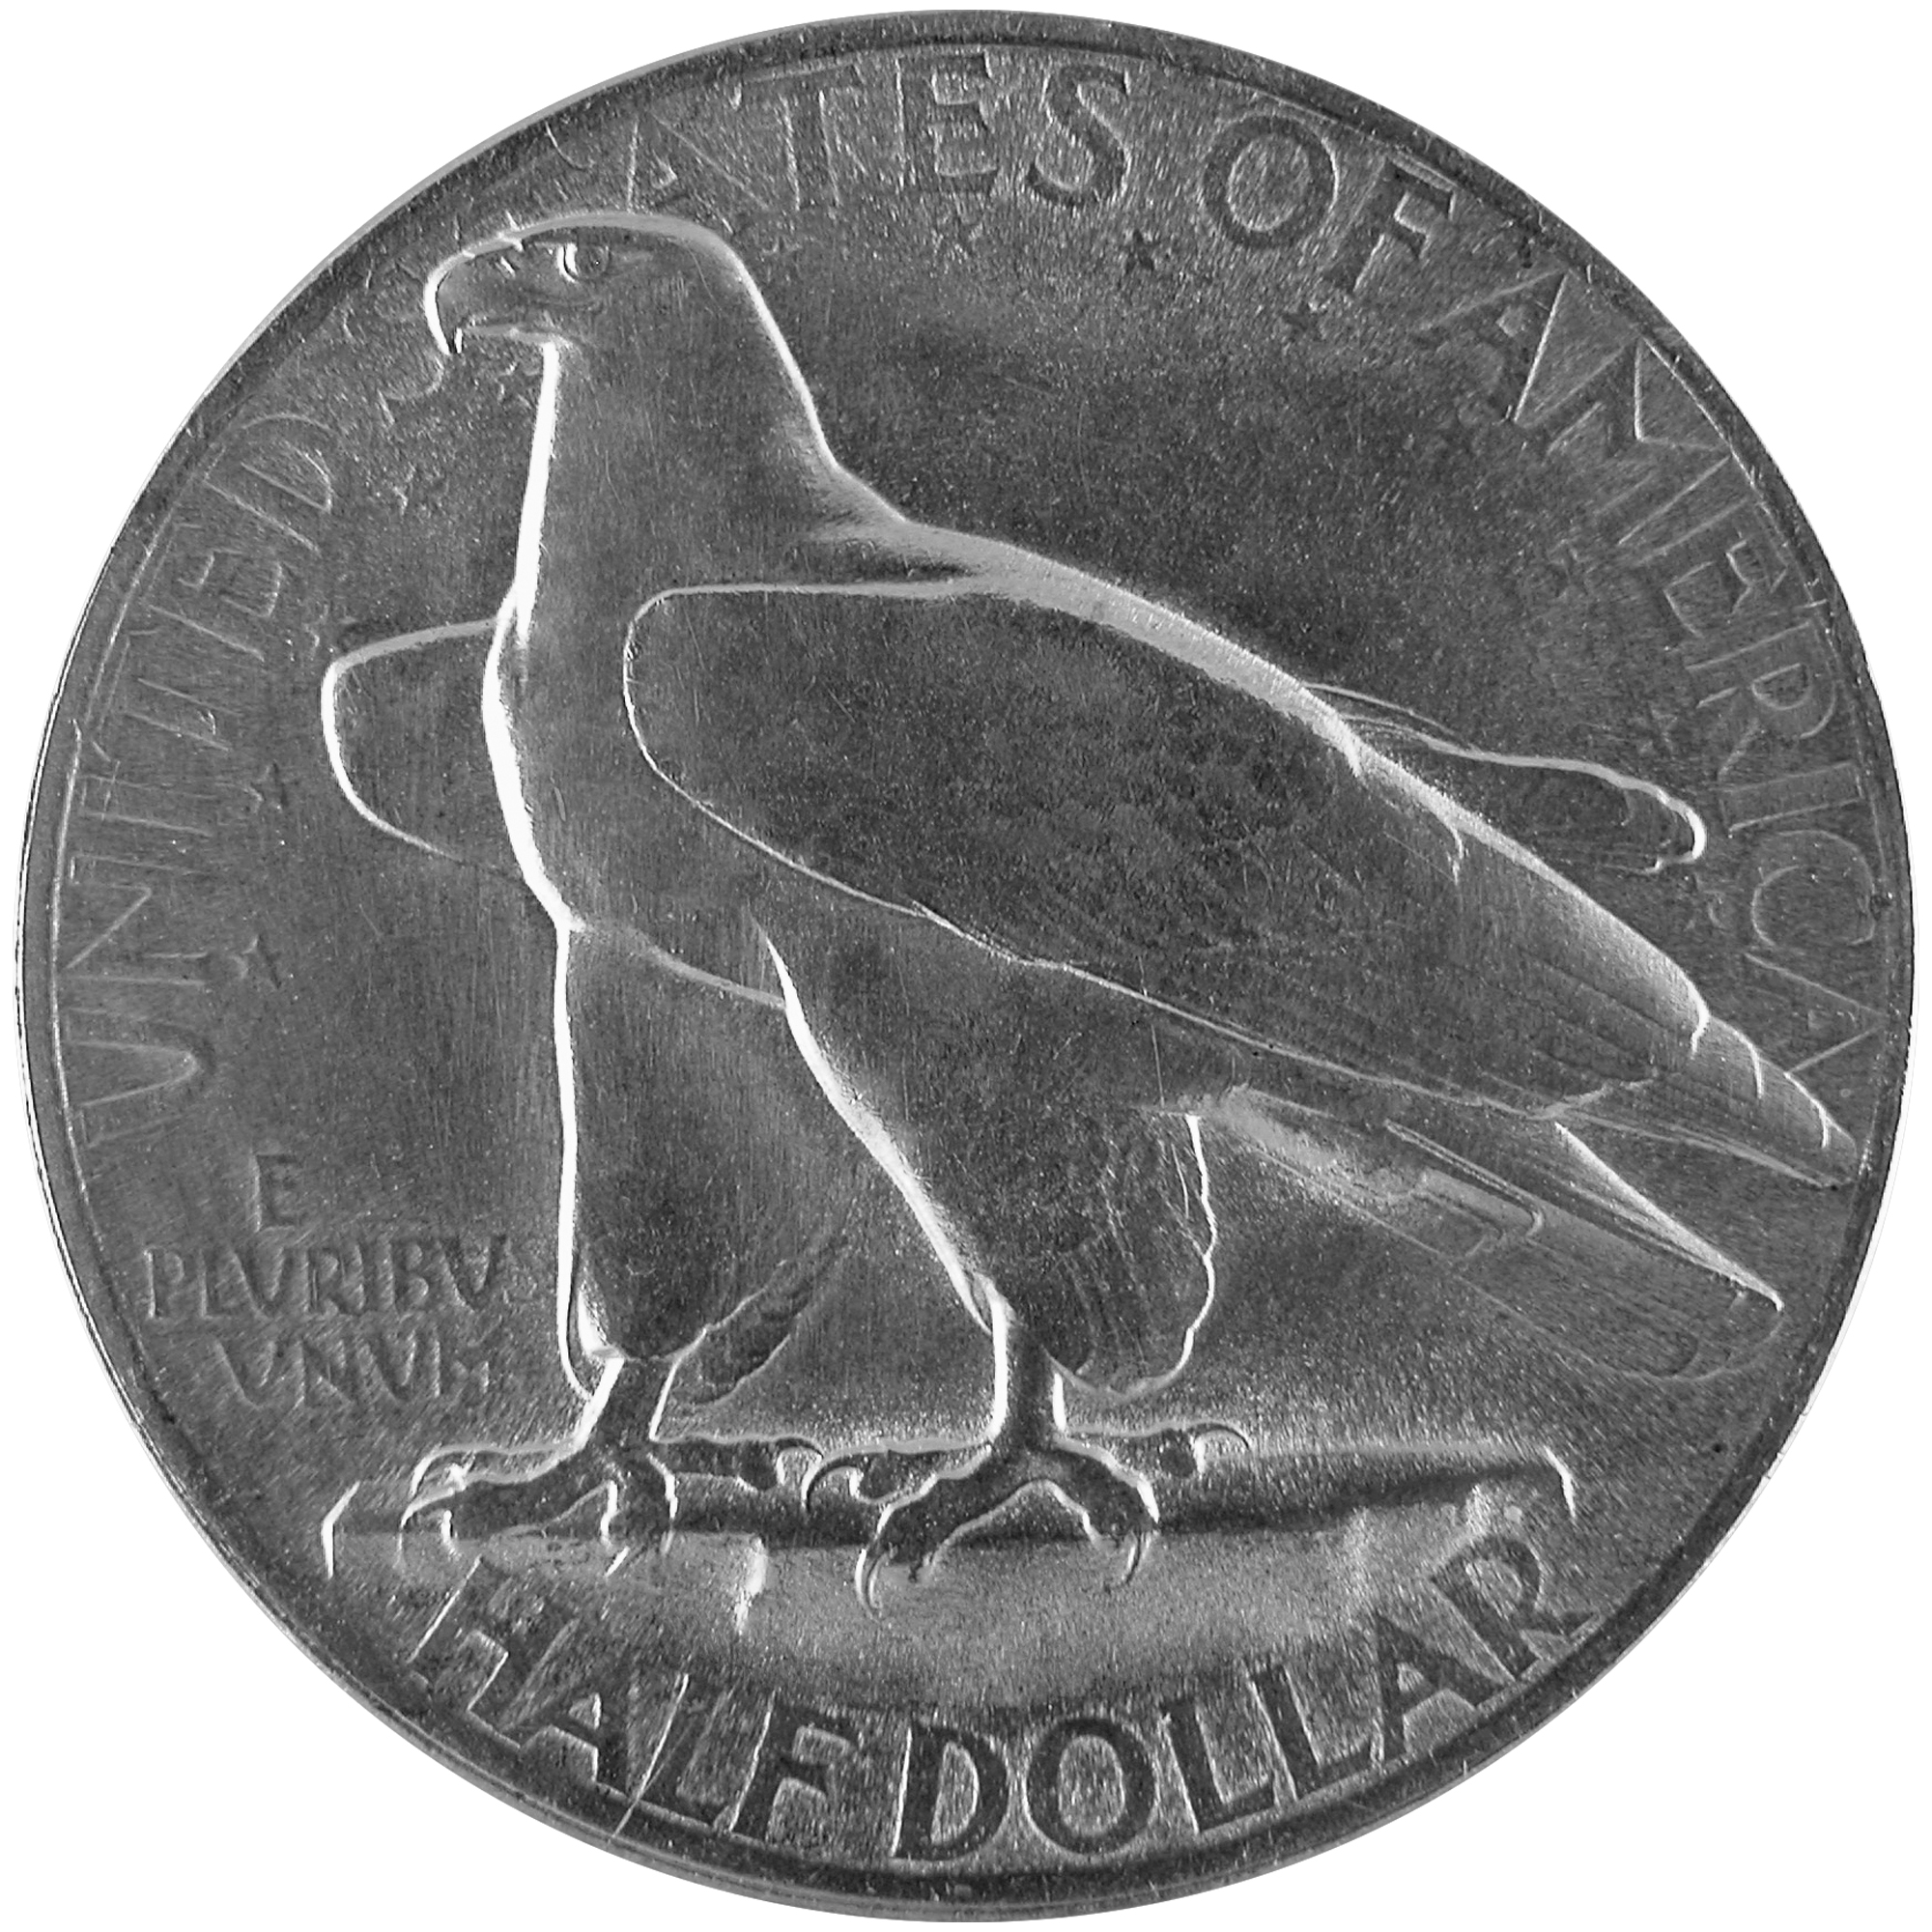 1935 Connecticut Tercentenary Commemorative Silver Half Dollar Coin Obverse